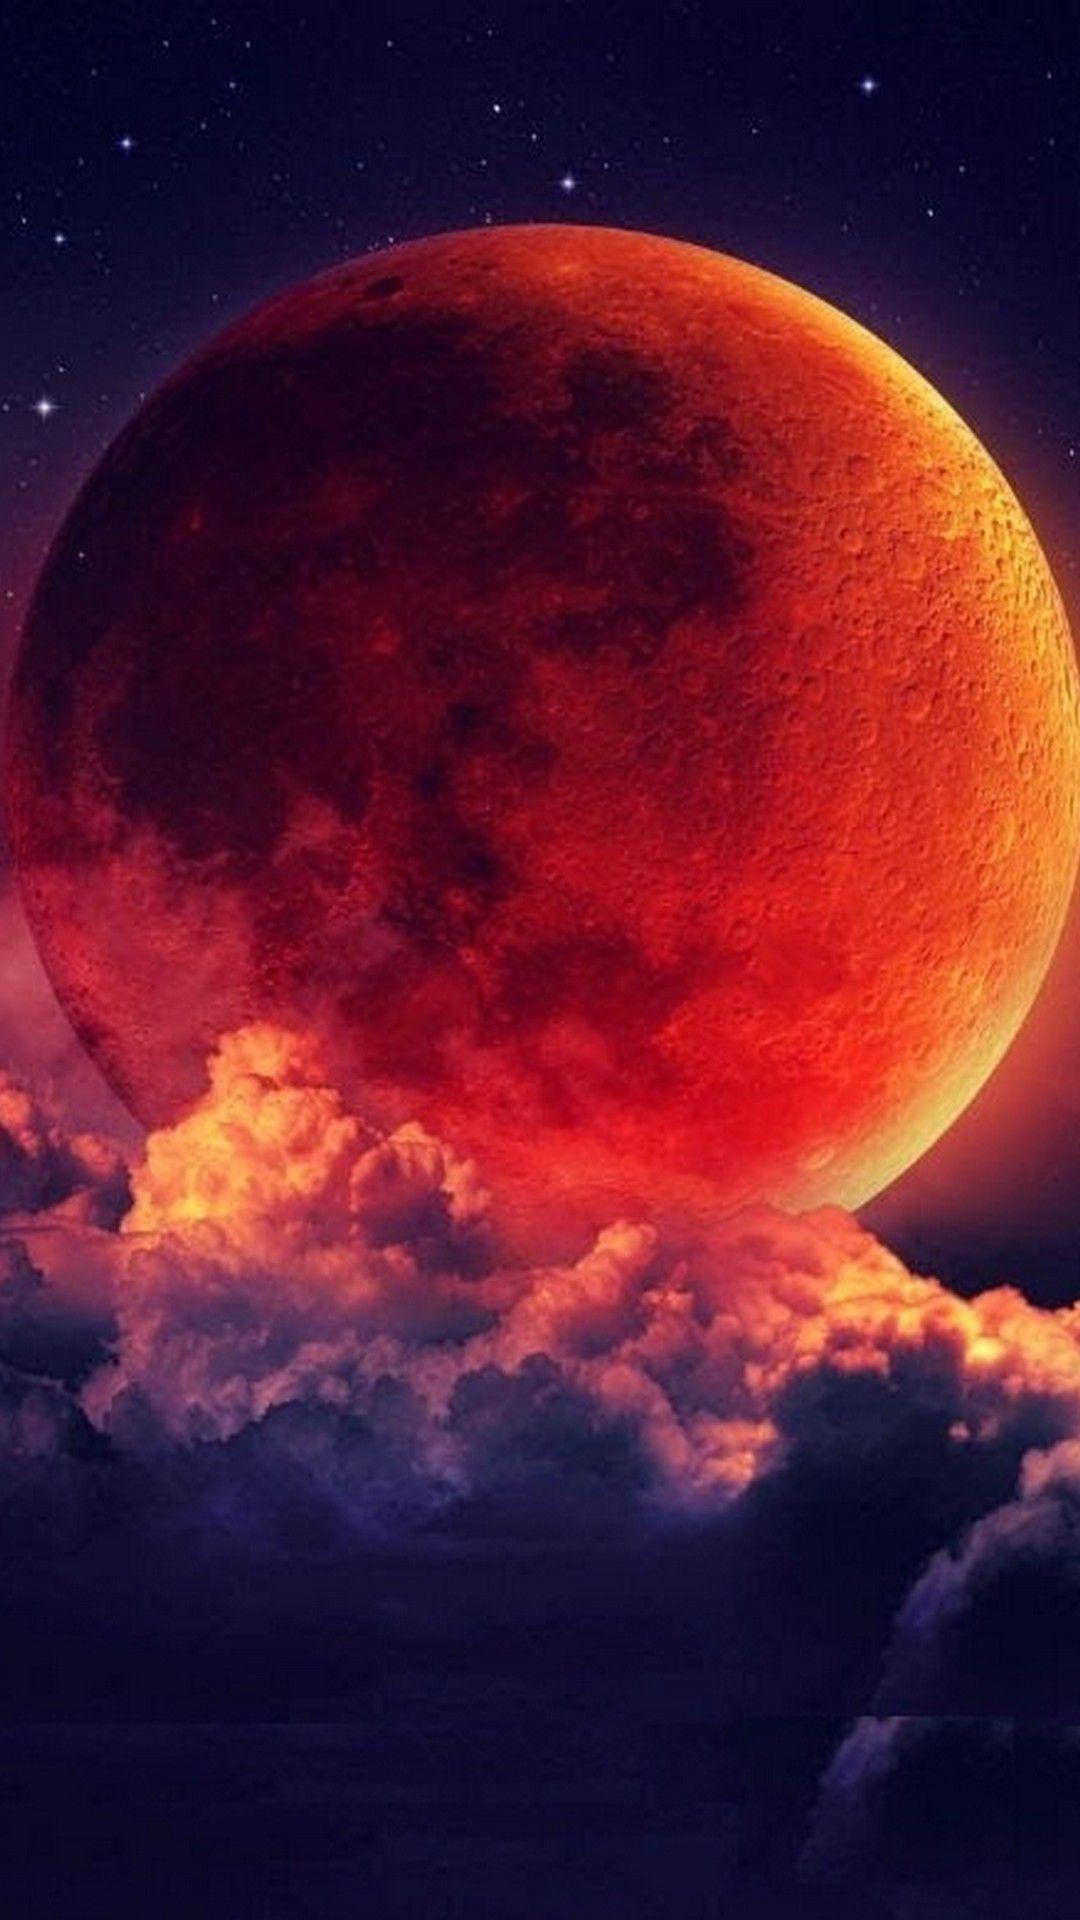 Blood Moon Wallpaper iPhone. iPhoneWallpaper. Blood moon